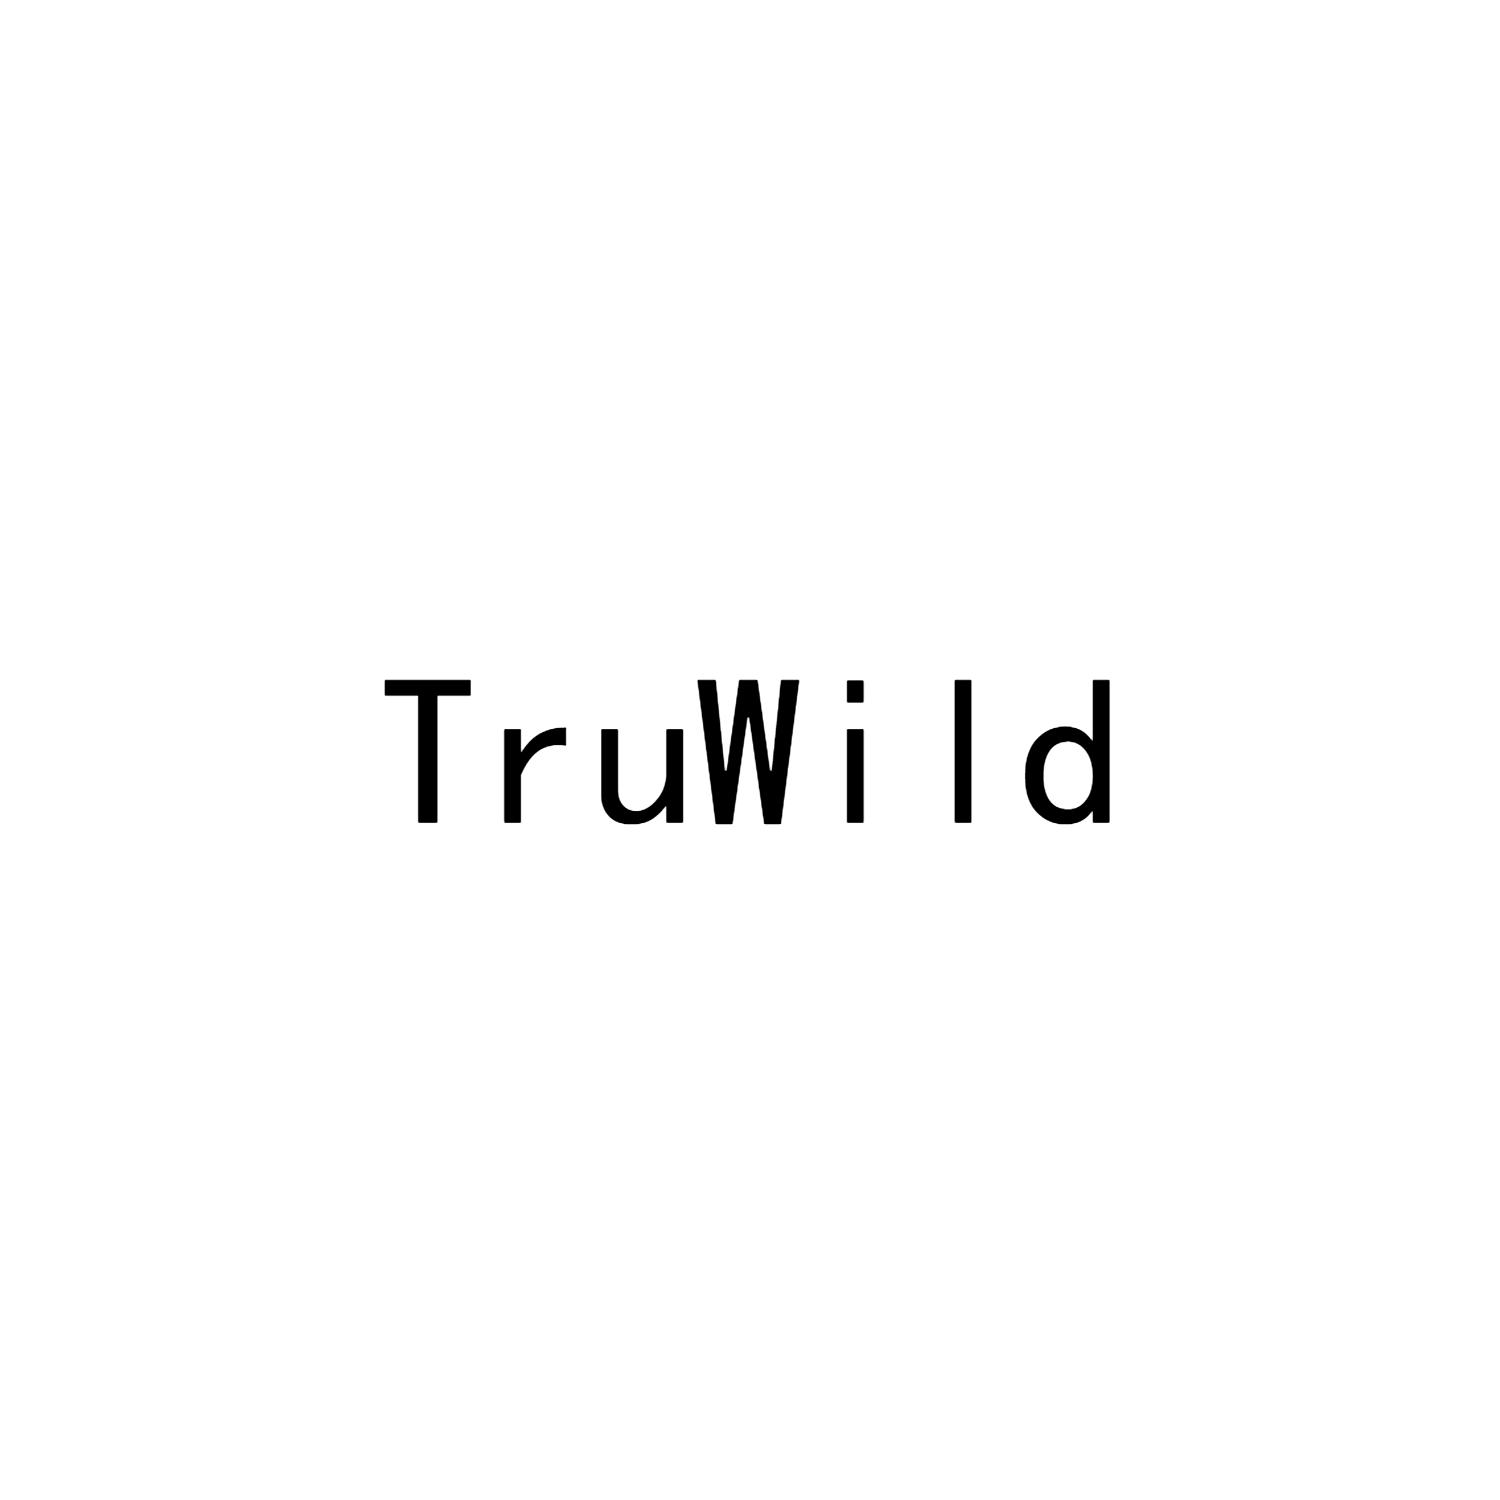 TRUWILD